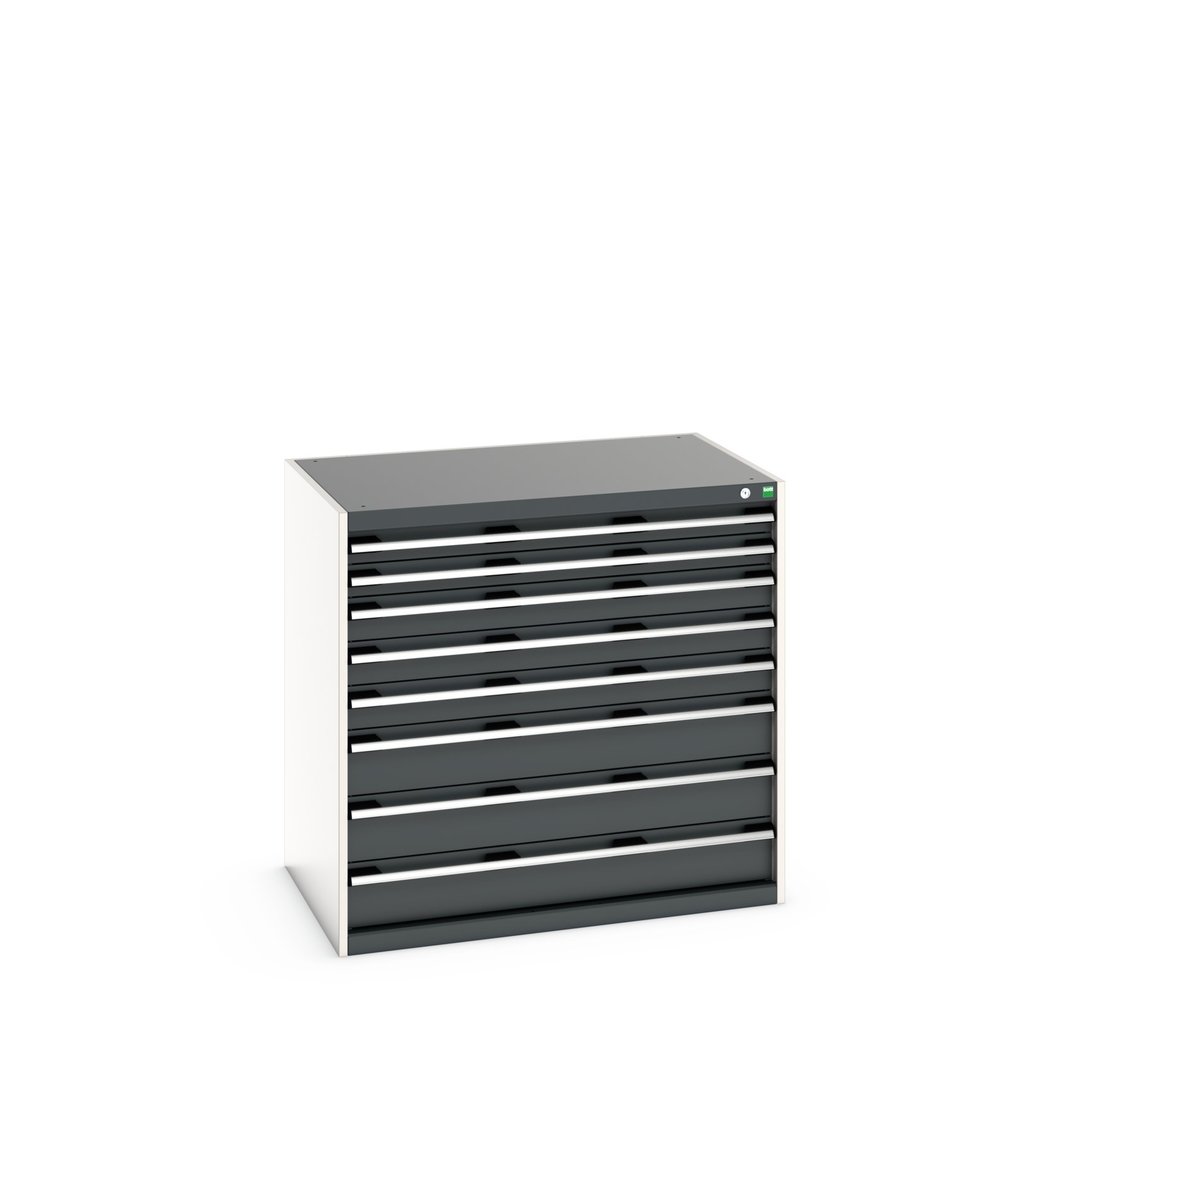 40029025. - cubio drawer cabinet